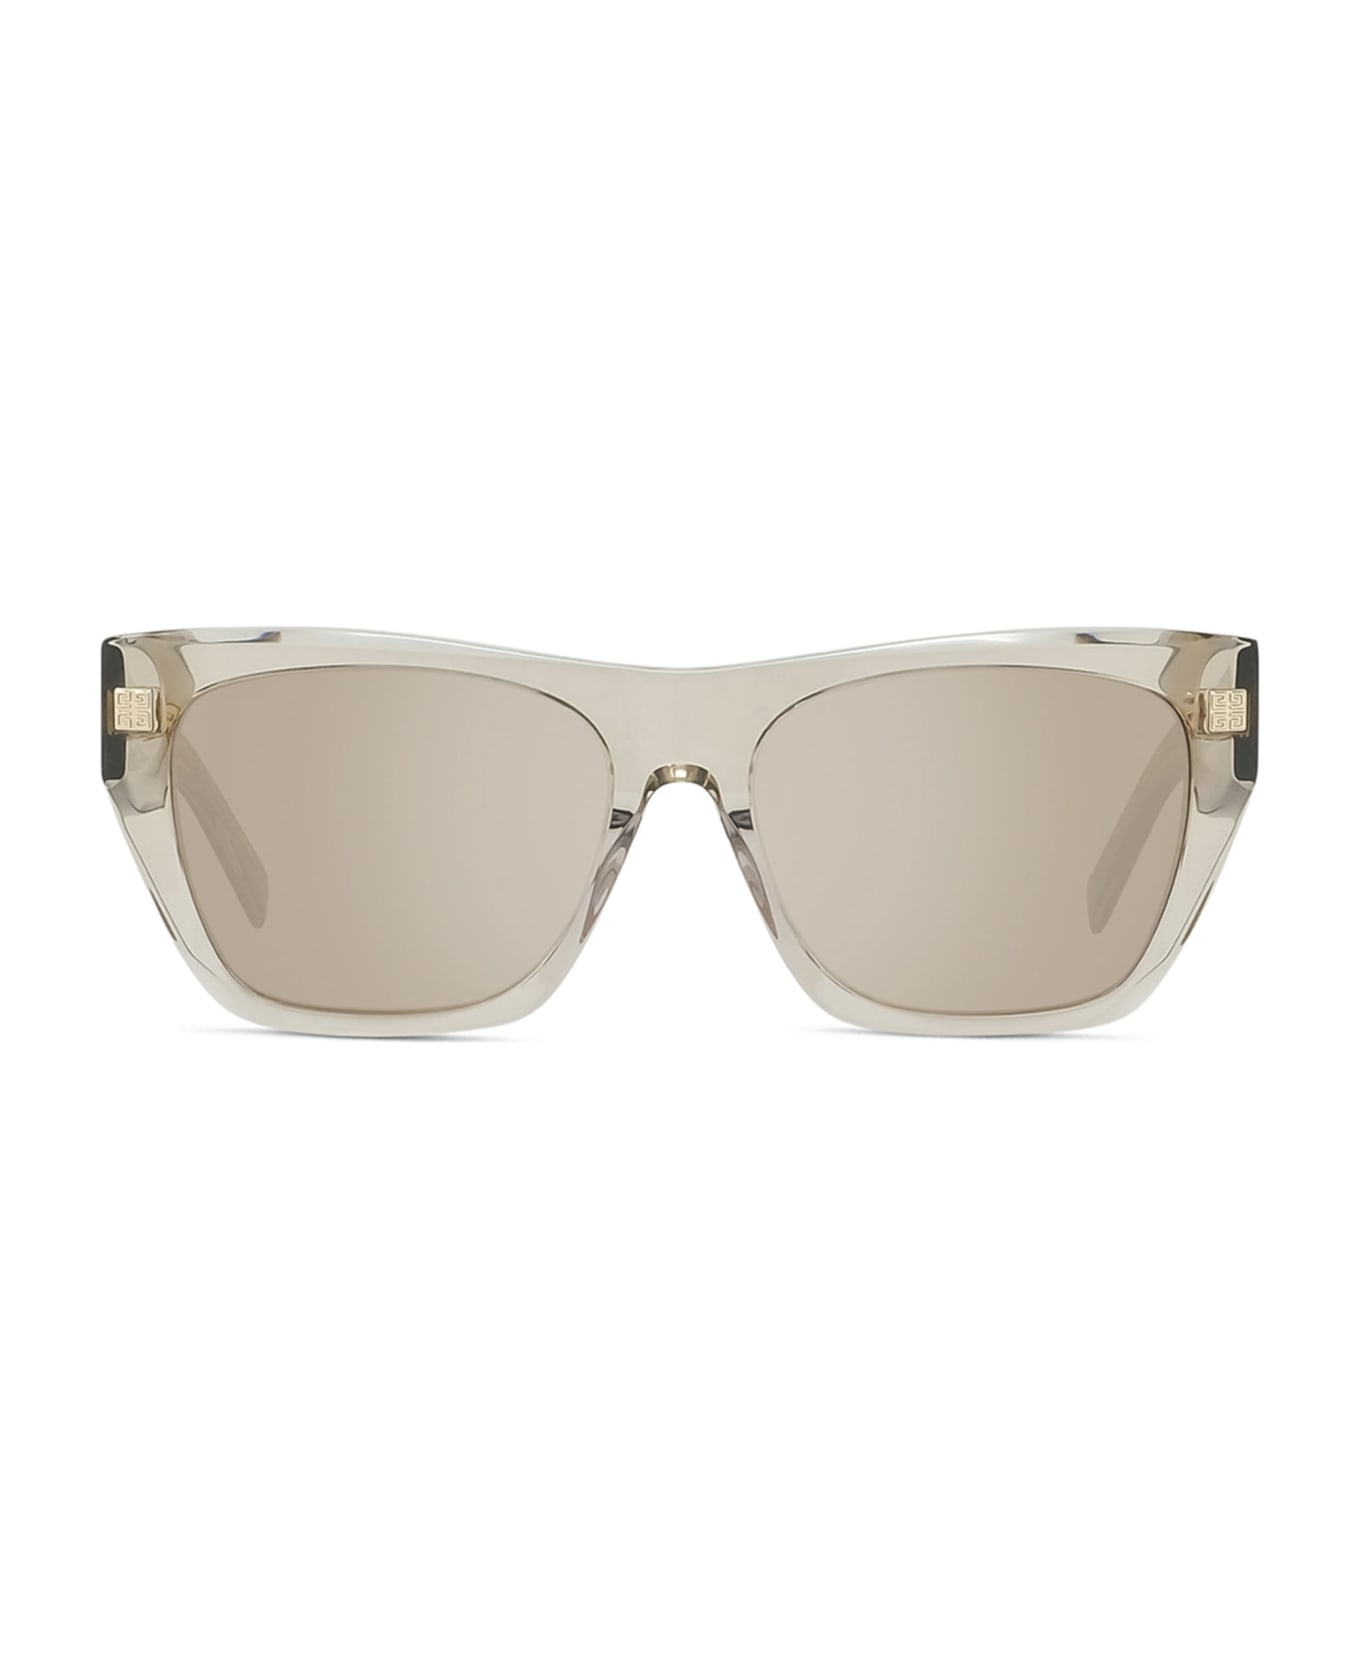 Givenchy Eyewear Gv40061u - Shiny LAGERFELD Brow Sunglasses - brown